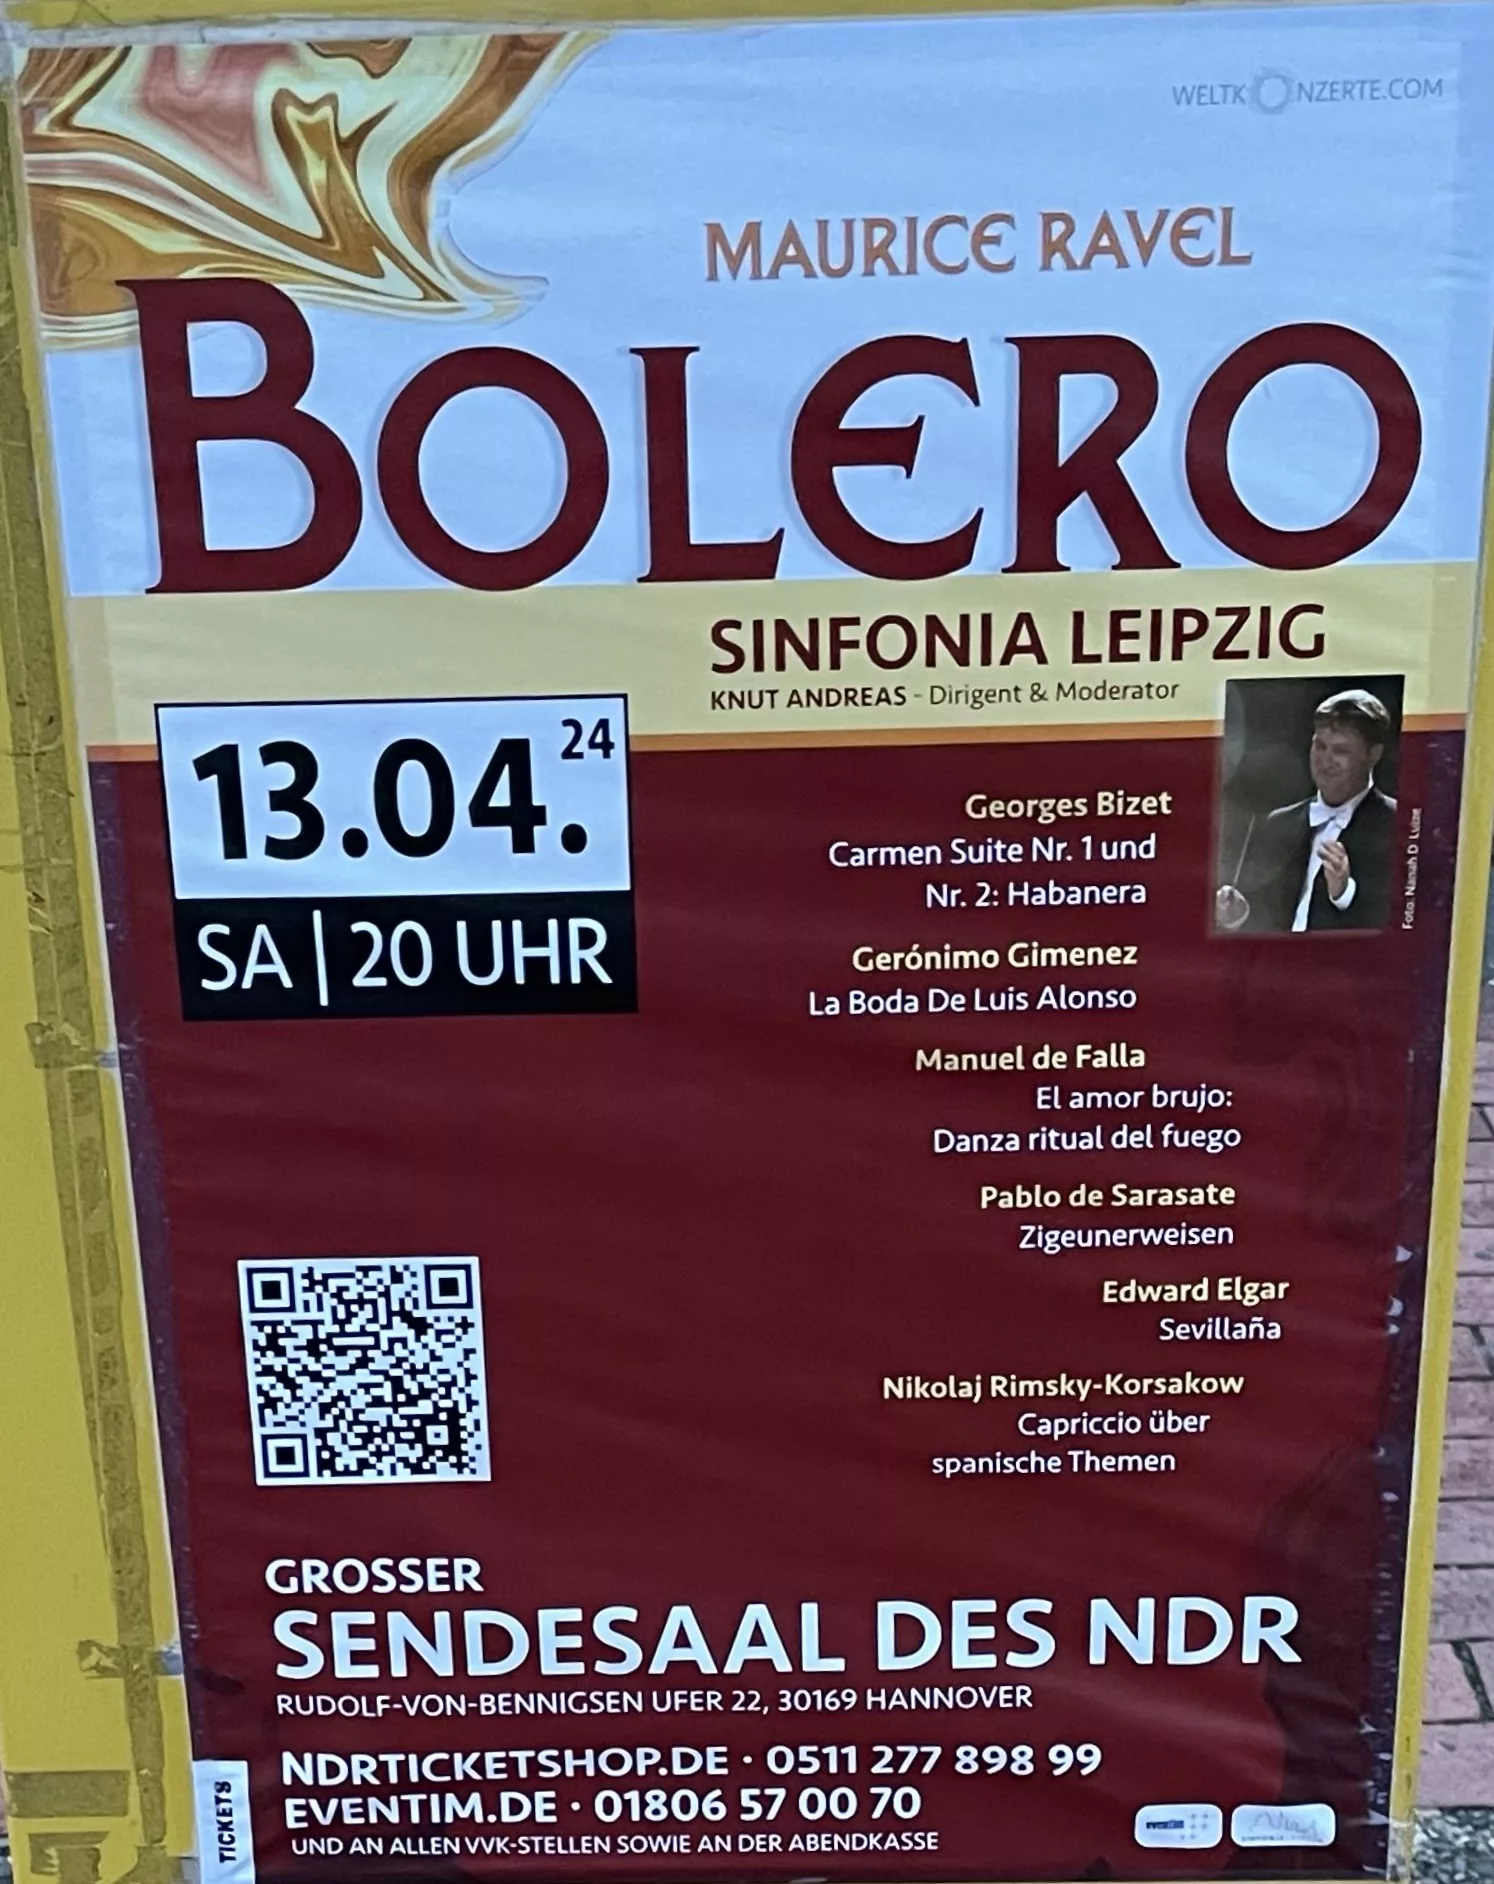 Bolero vonndet Singonia Leipzig im Großen Sendesaal des NDR